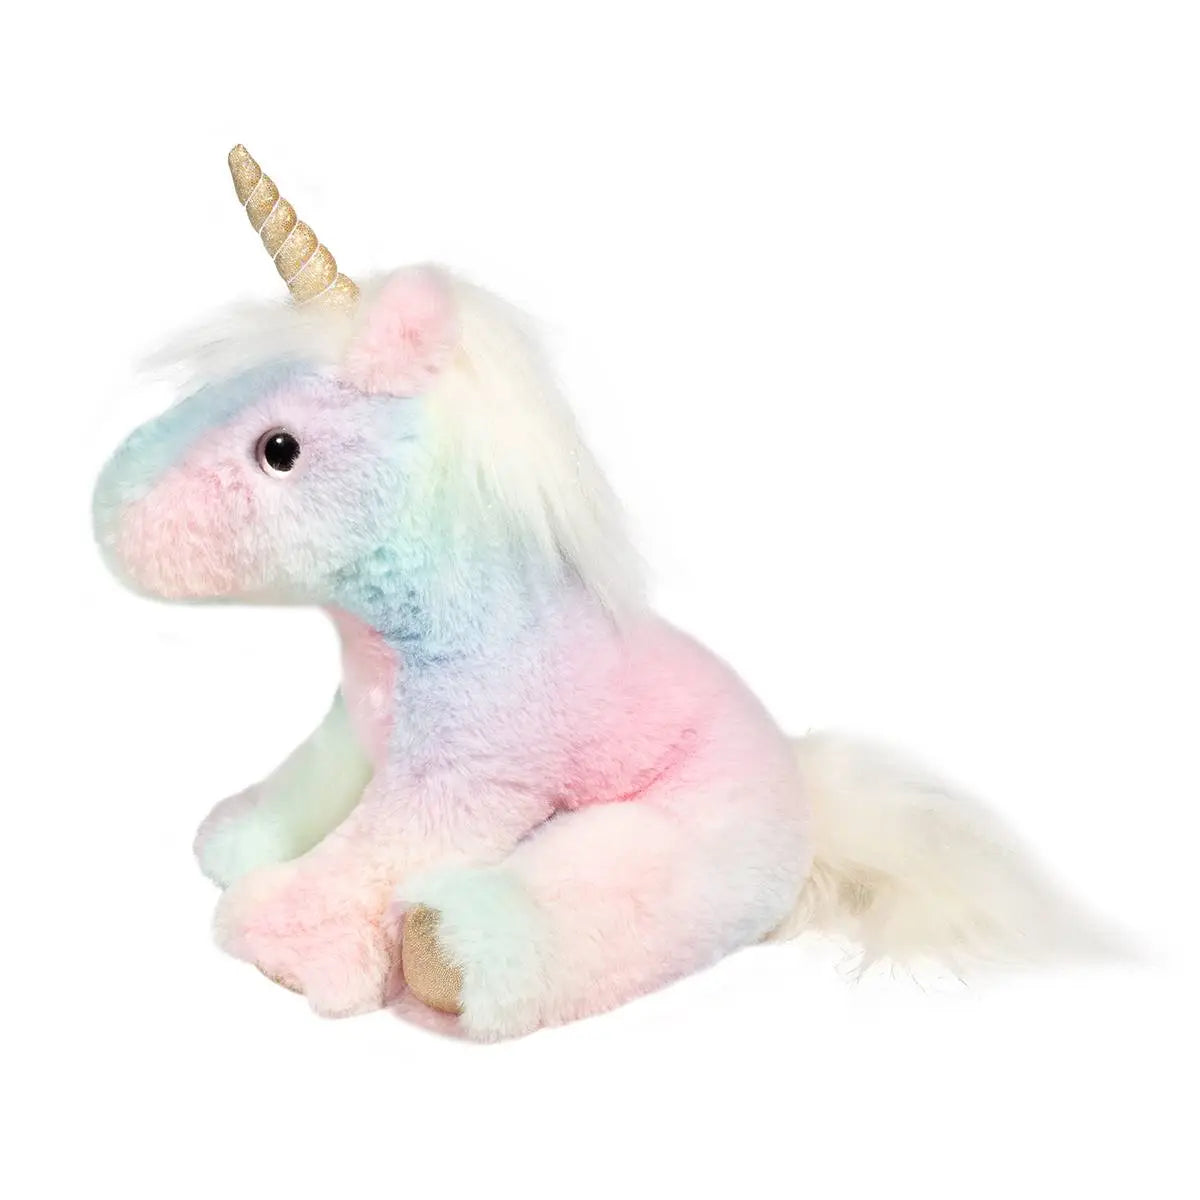 Kylie Soft Unicorn | Douglas Toys